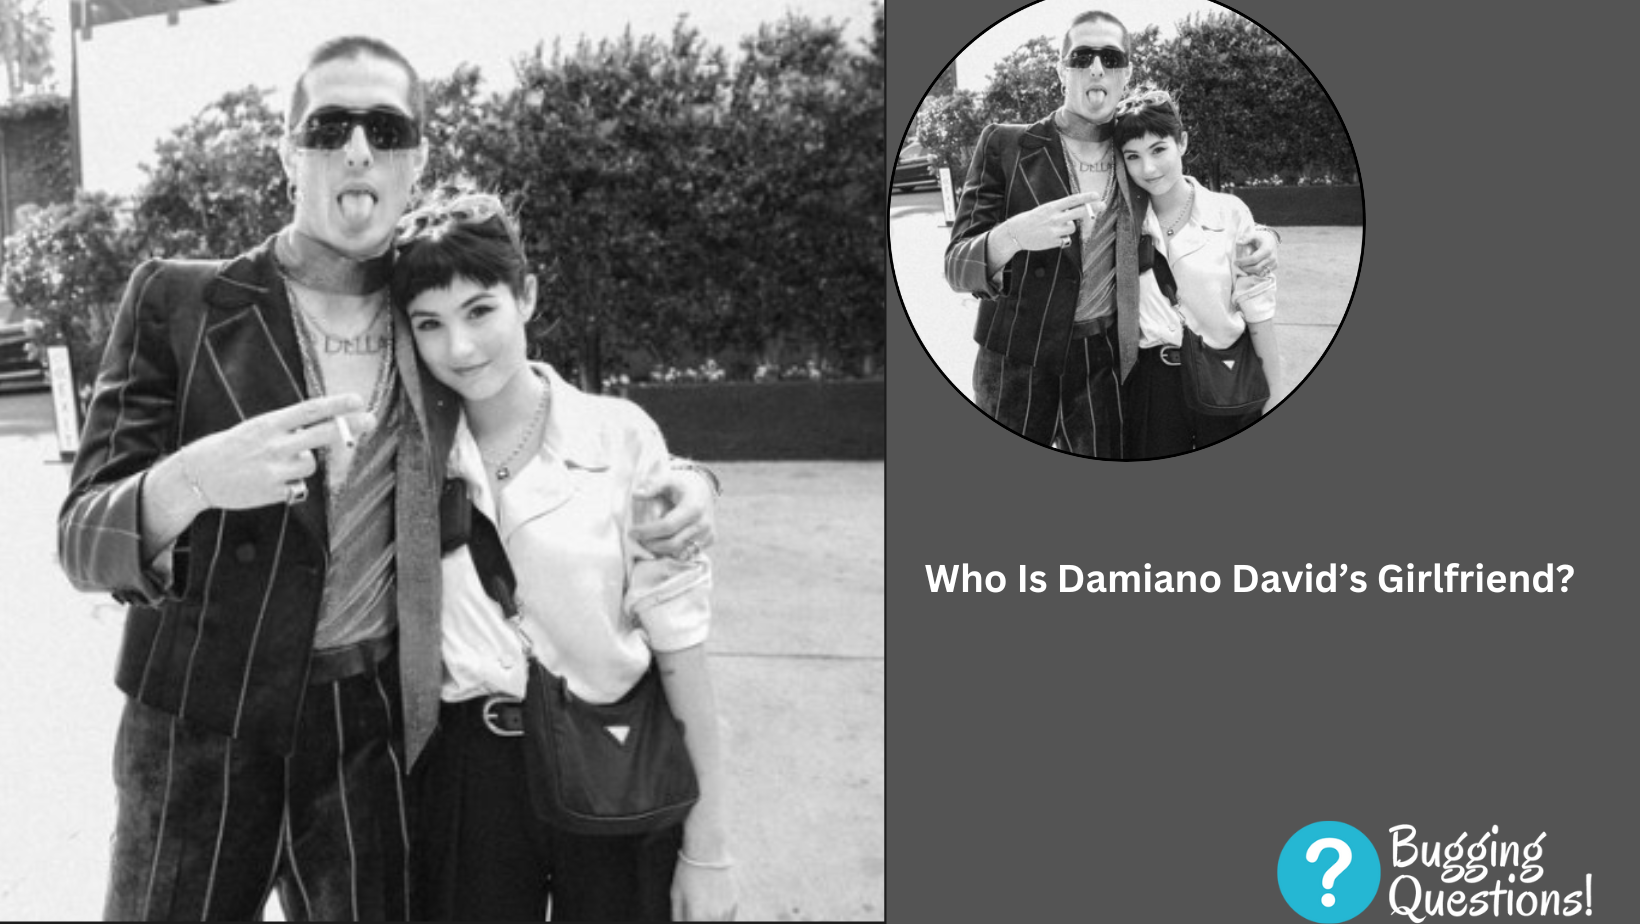 Who Is Damiano David’s Girlfriend?